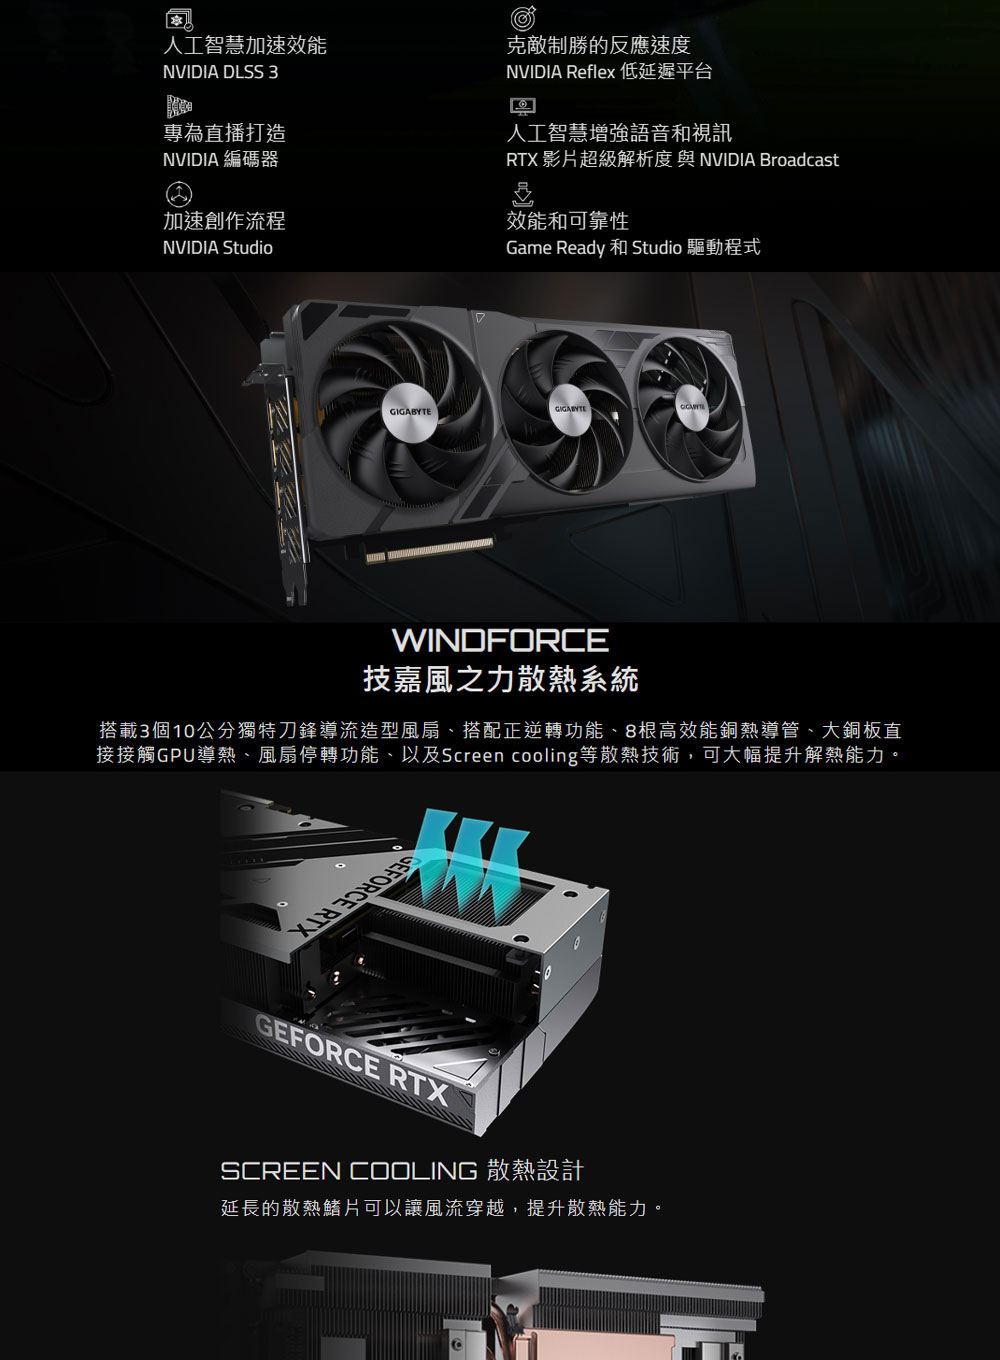 GIGABYTE 技嘉 GeForce RTX 4080 S